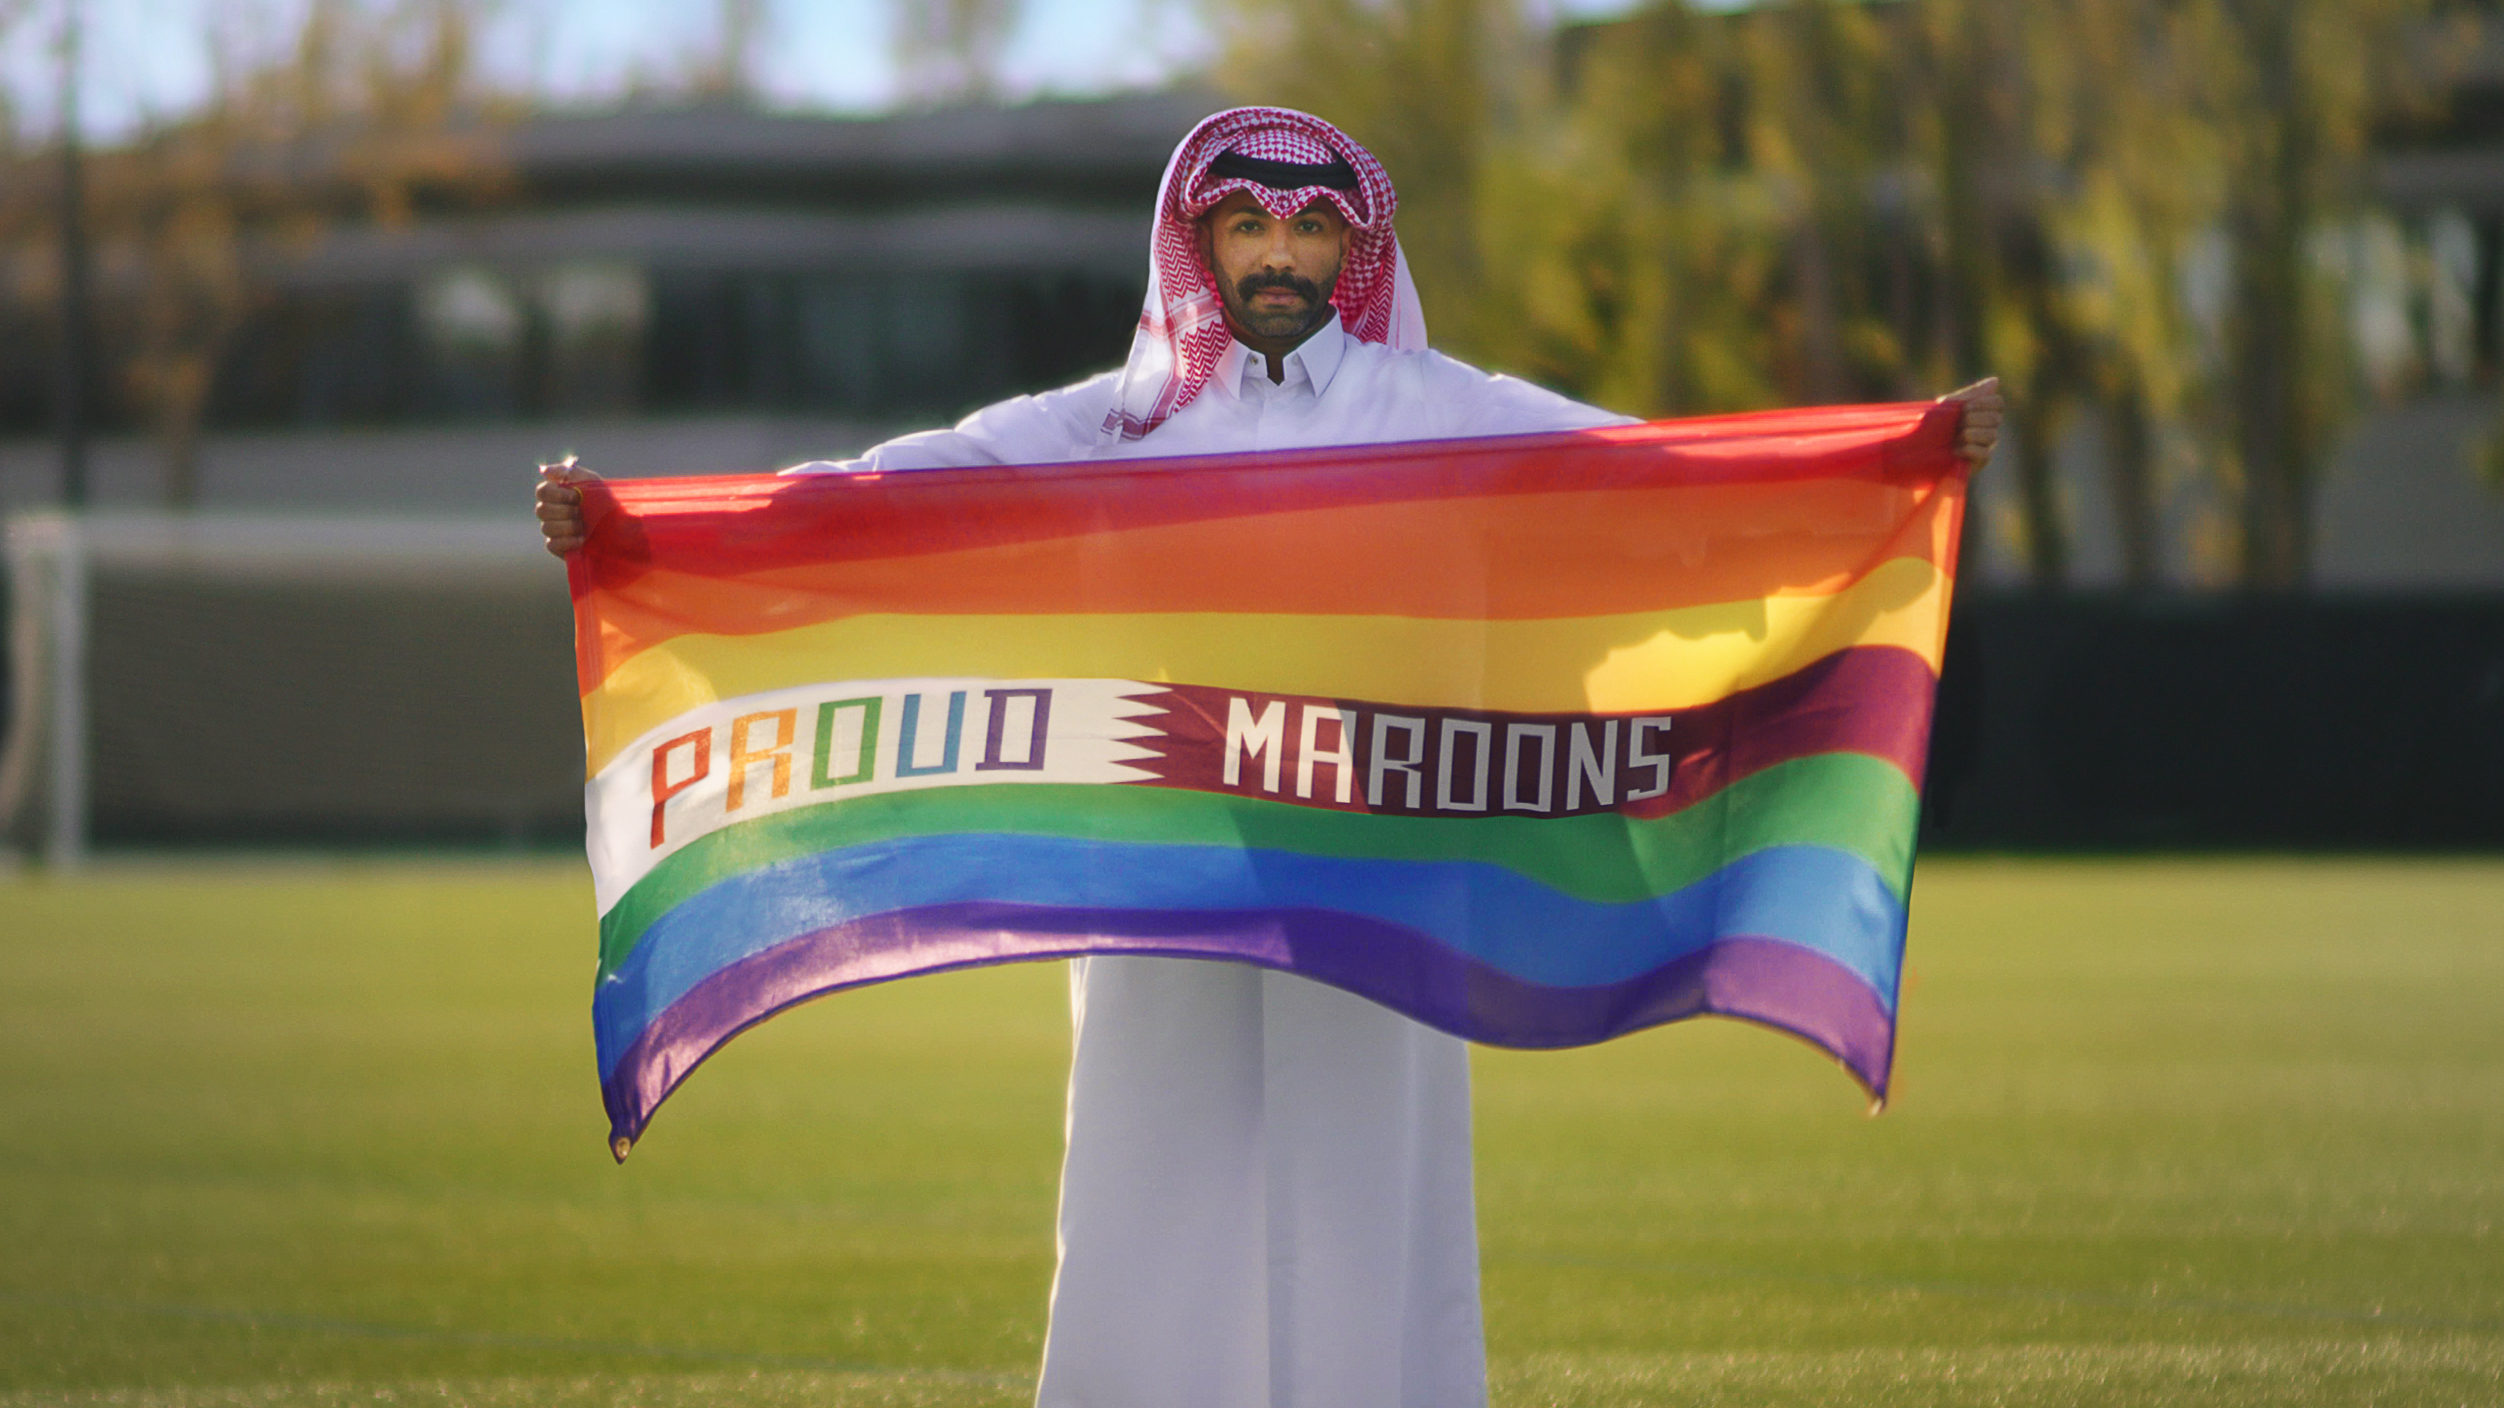 Qatar World Cup, Proud Maroons